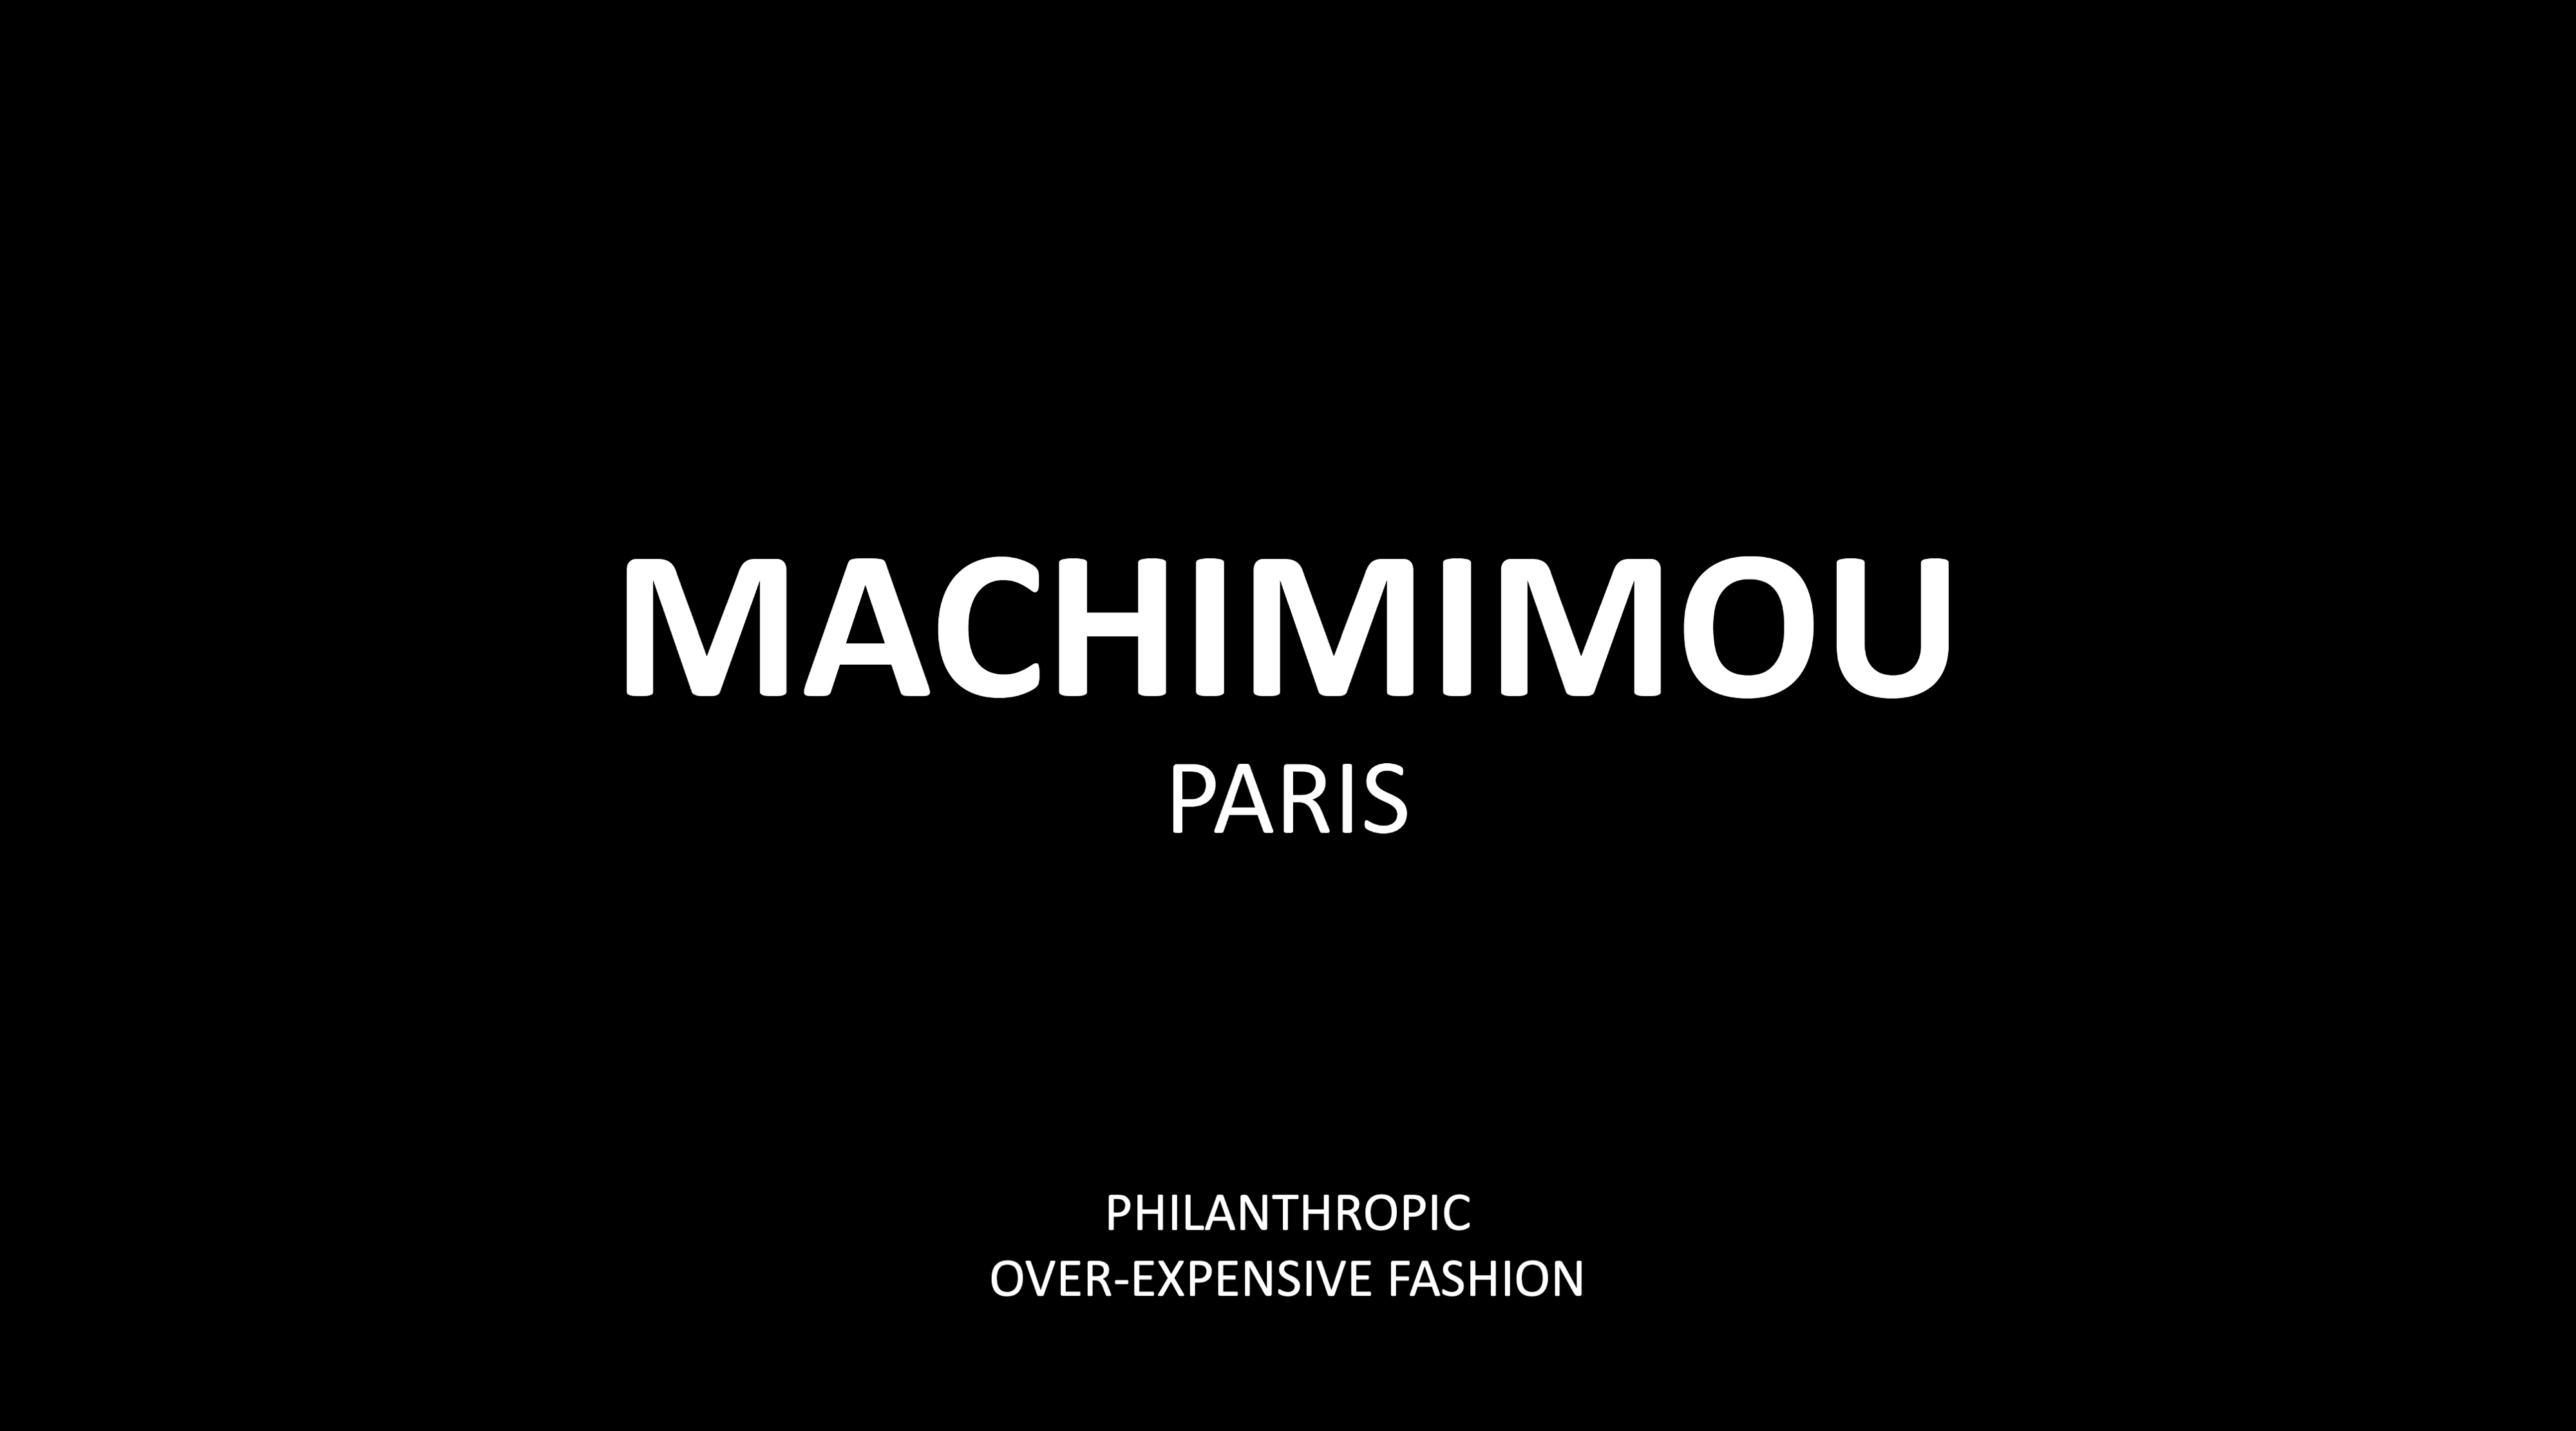 MACHIMIMOU PARIS - Philanthropic Over-Expensive Fashion